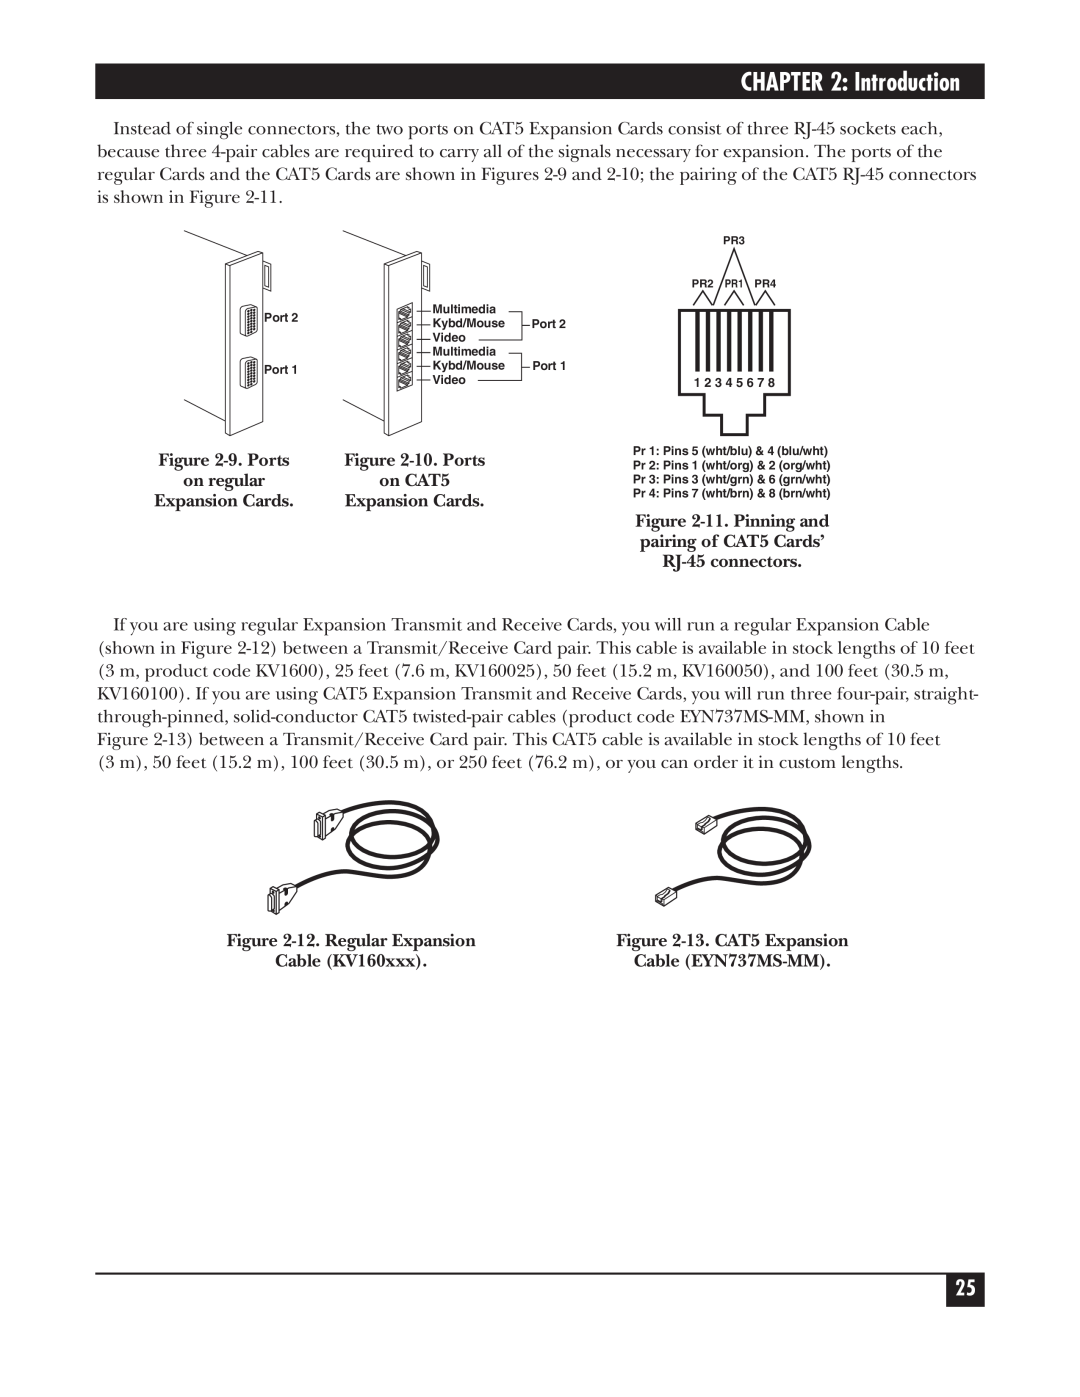 Black Box KV162A manual Introduction, Expansion Cards, Cable KV160xxx, 9. Ports, 10. Ports, on regular, on CAT5 